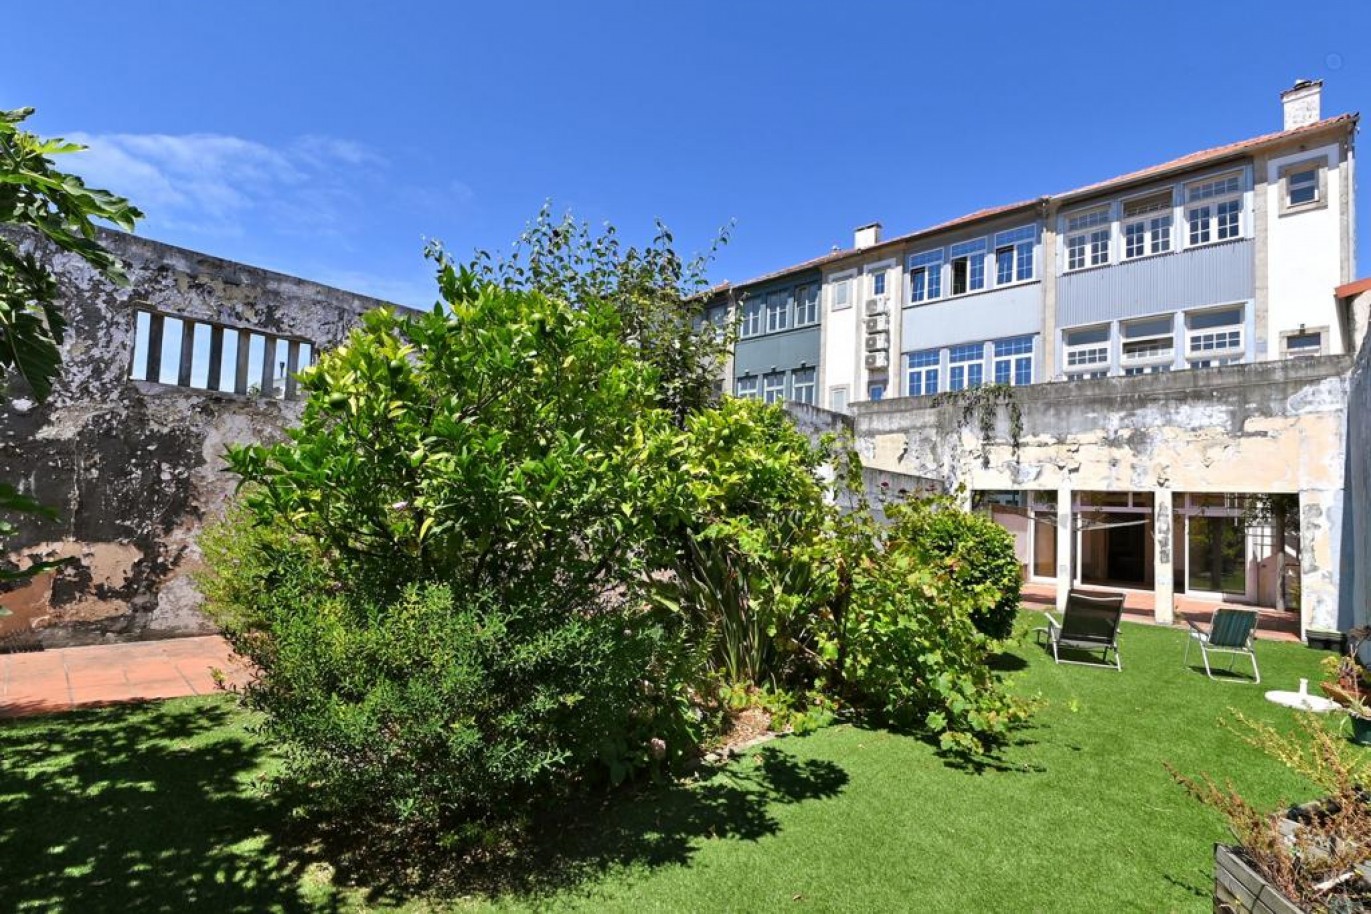 Villa mit Innenhof, zu verkaufen, in Campanhã, Porto, Portugal_204017